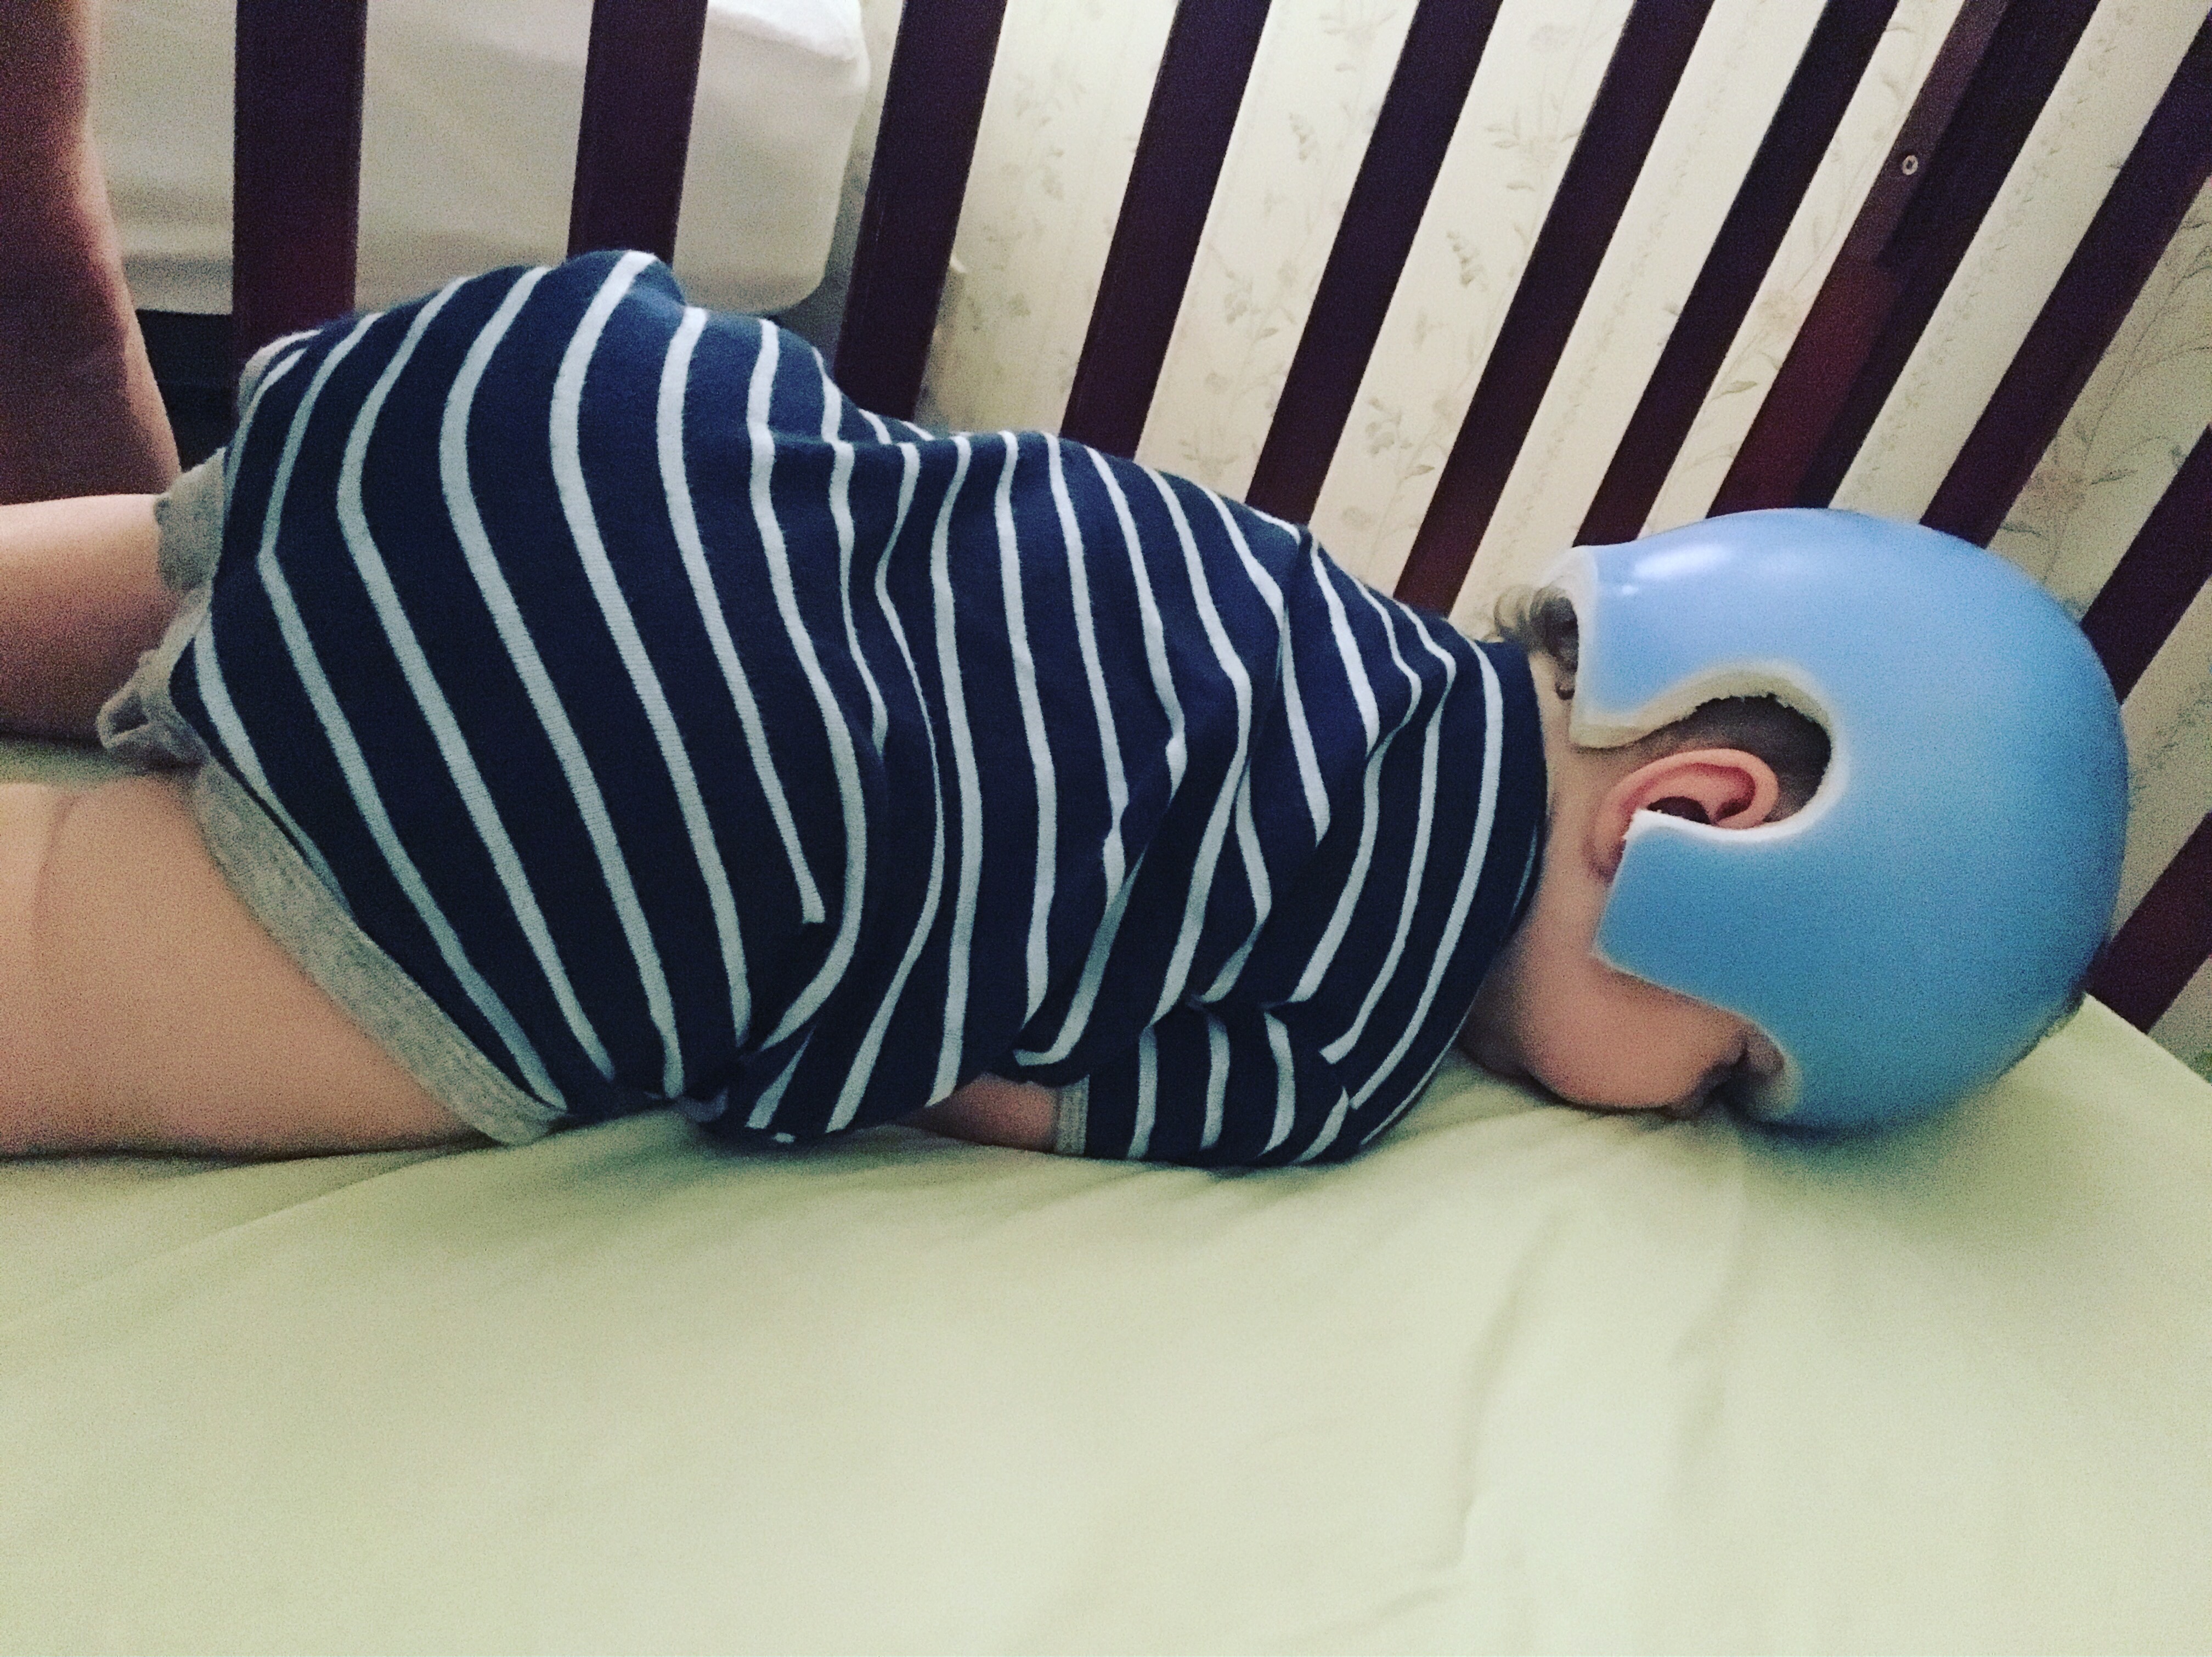 Plagiocephaly and a baby helmet sleeping